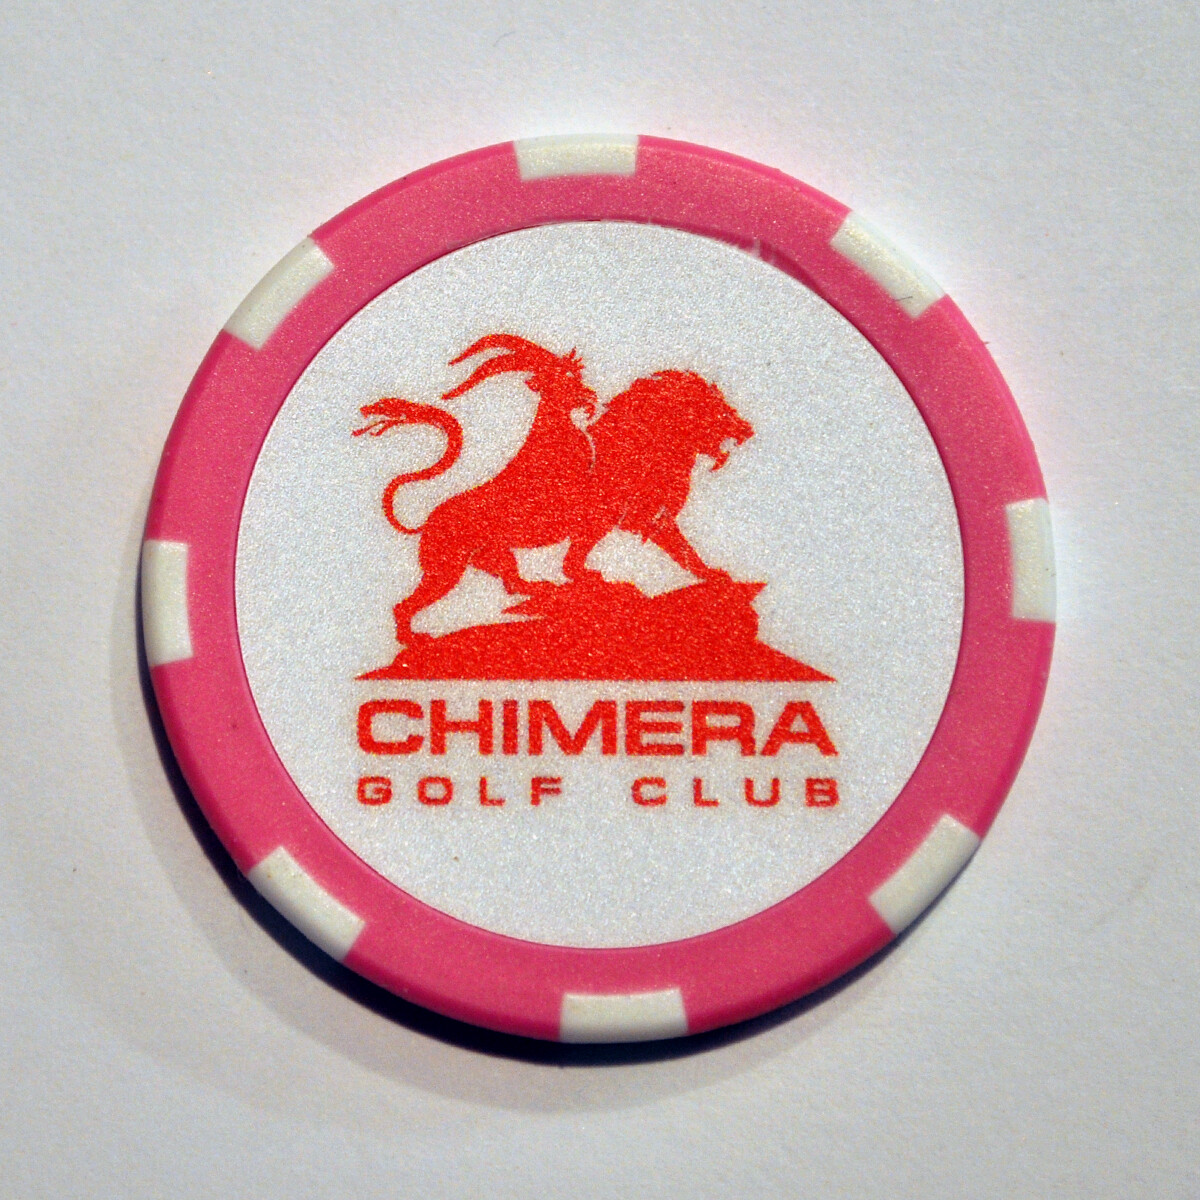 Poker Chip - Chimera - Pink/White